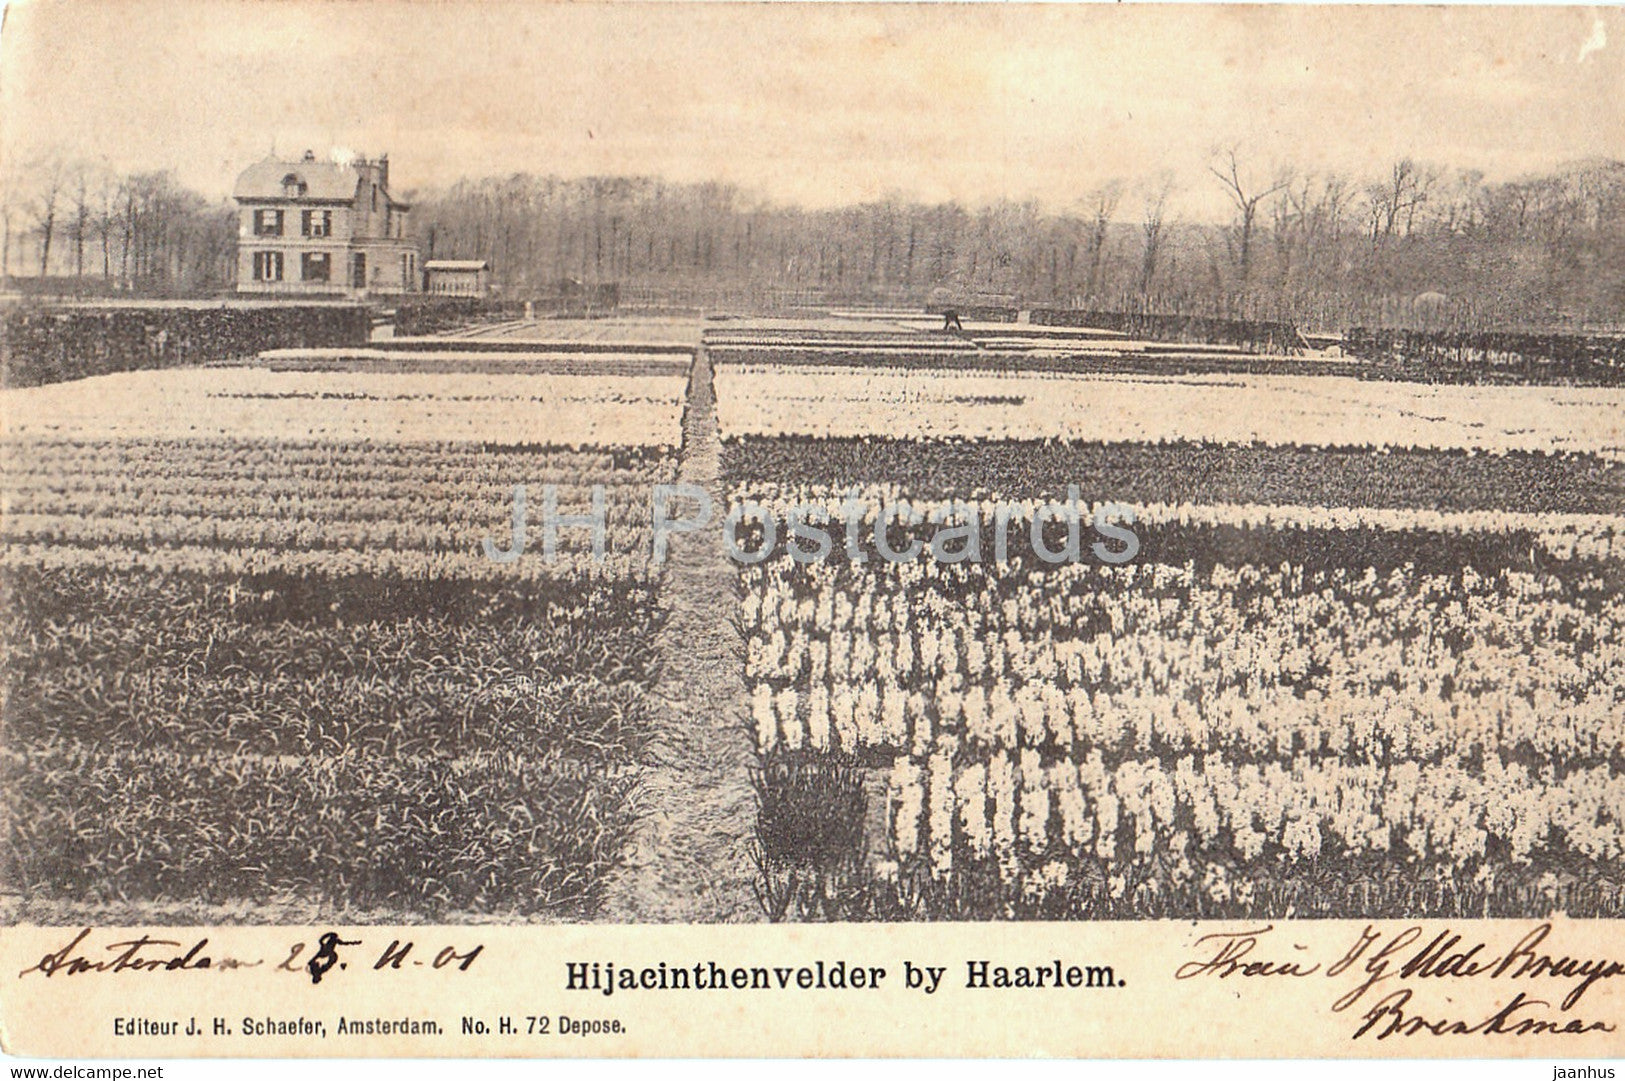 Hijacinthenvelder by Haarlem - hyacinth flower field - old postcard - 1901 - Netherlands - used - JH Postcards